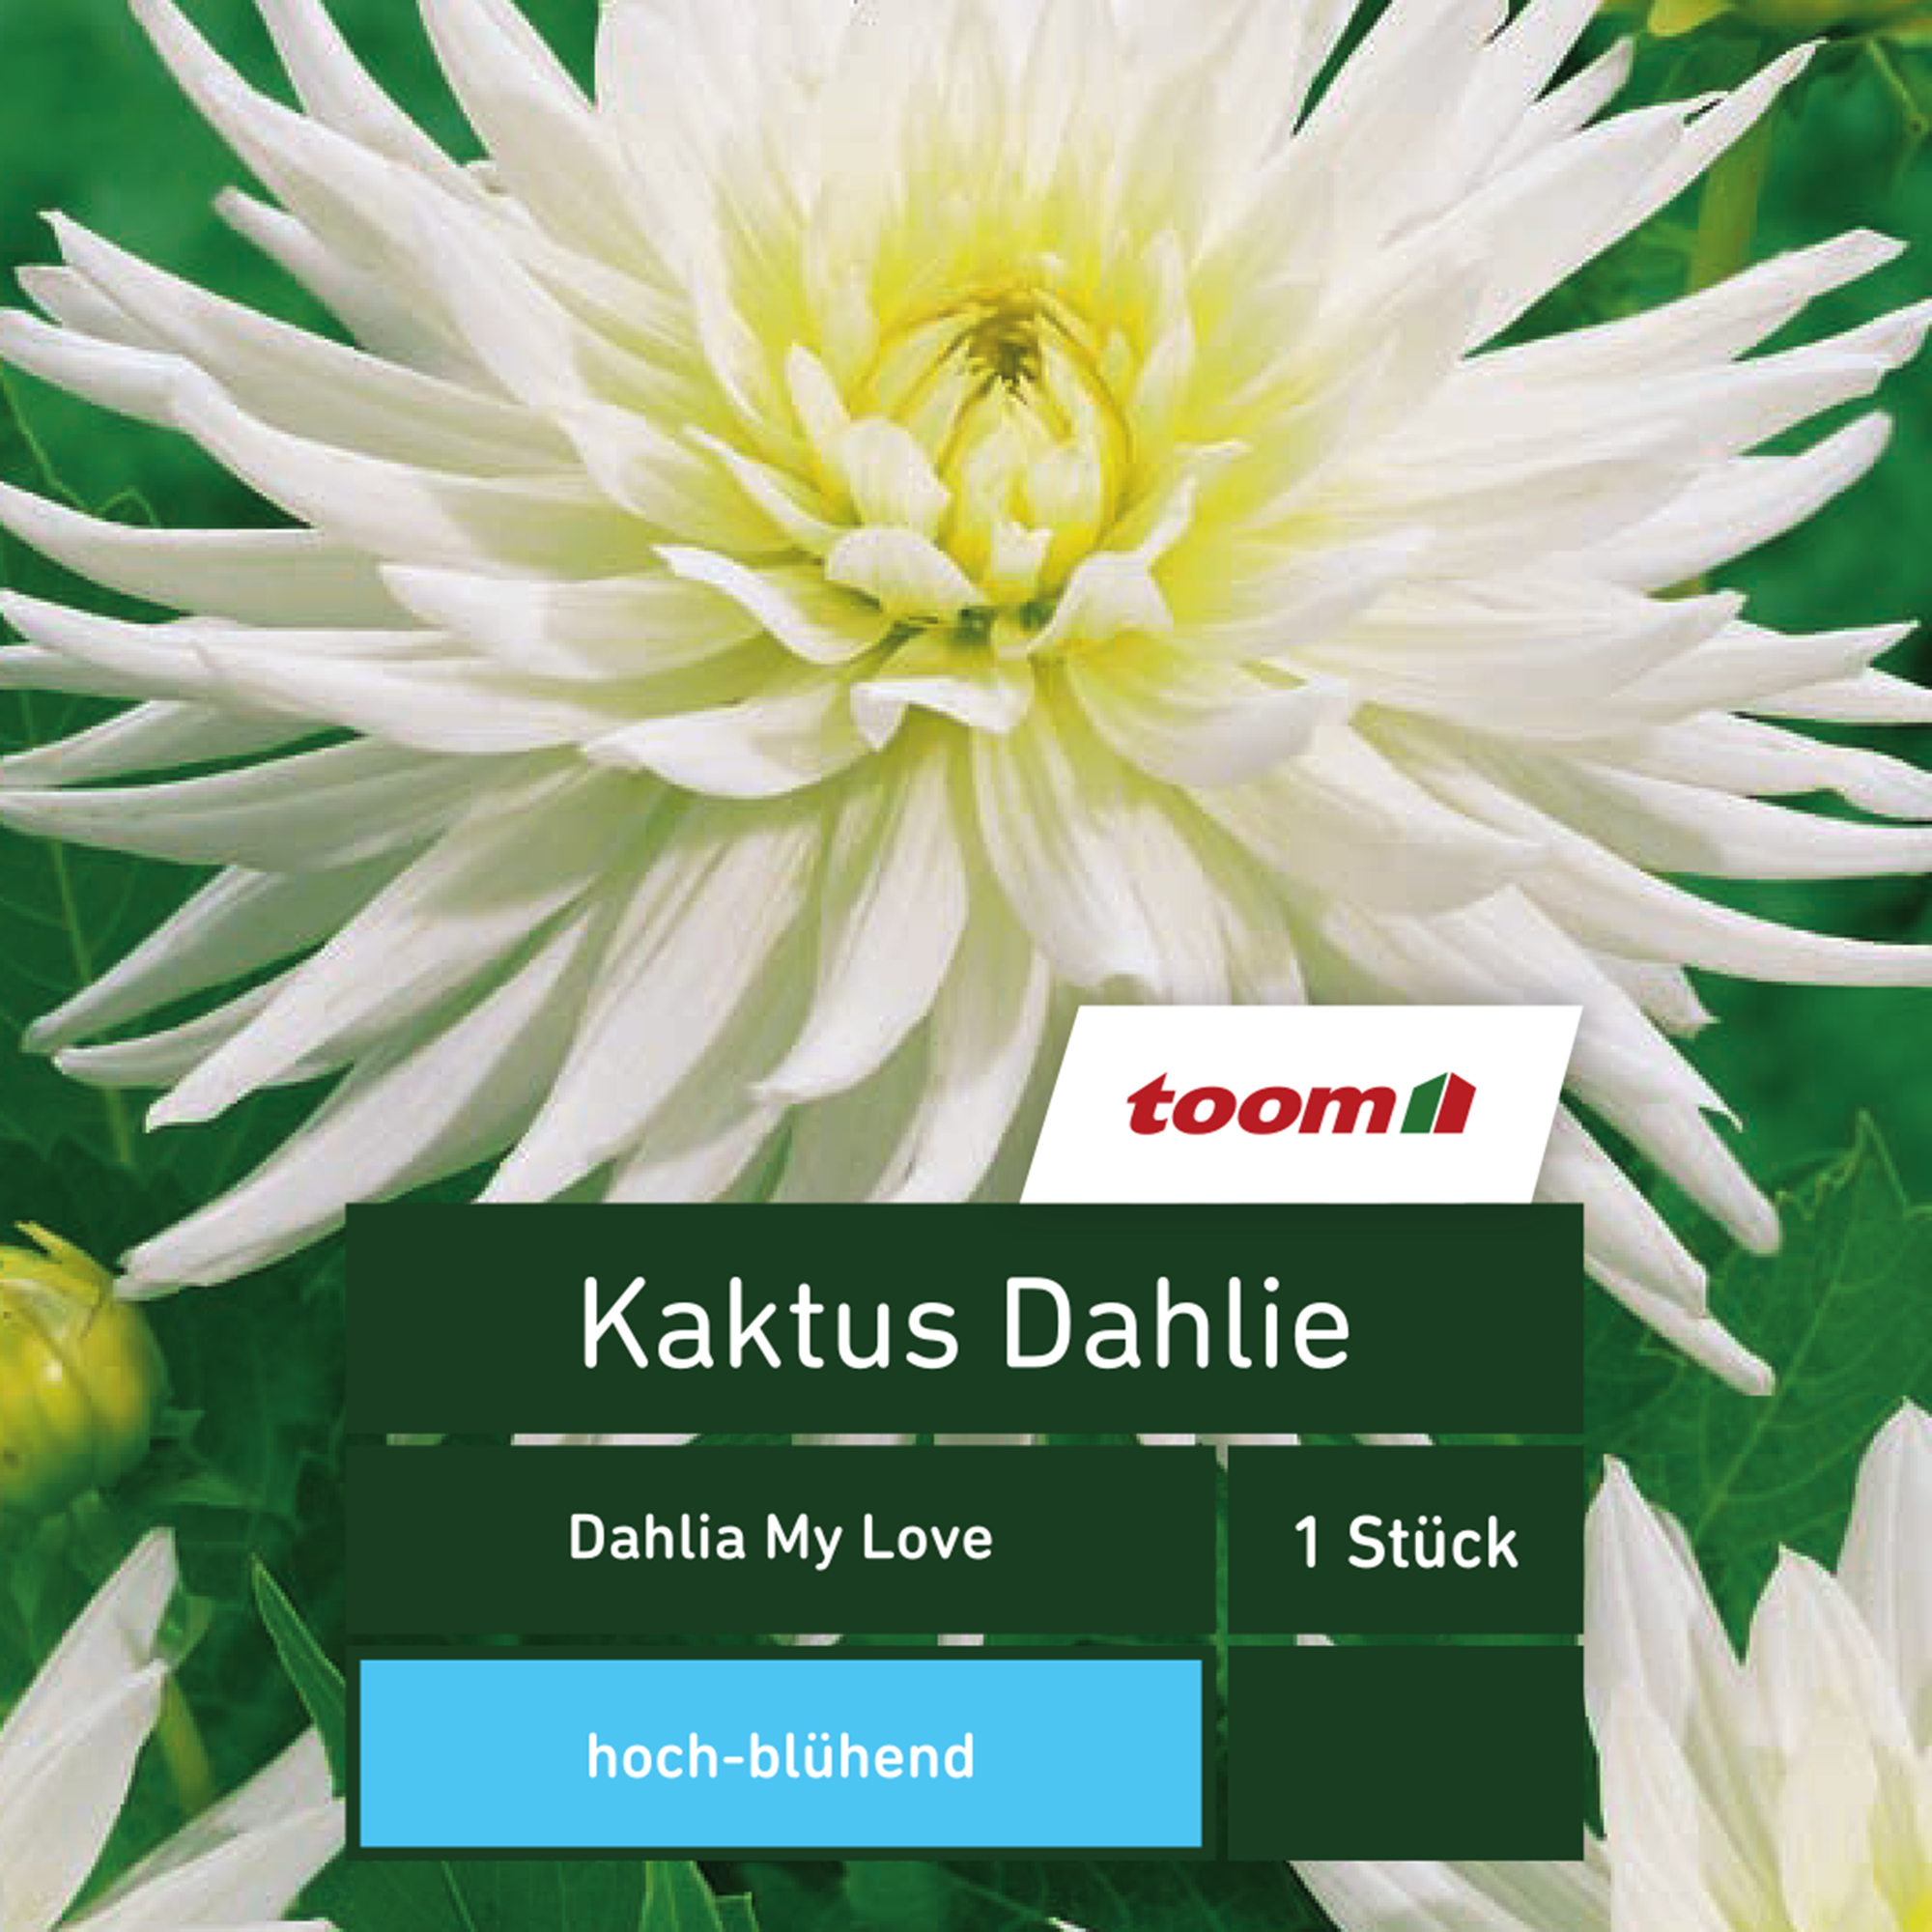 Kaktus-Dahlie 'Dahlia My Love', 1 Stück, weiß + product picture